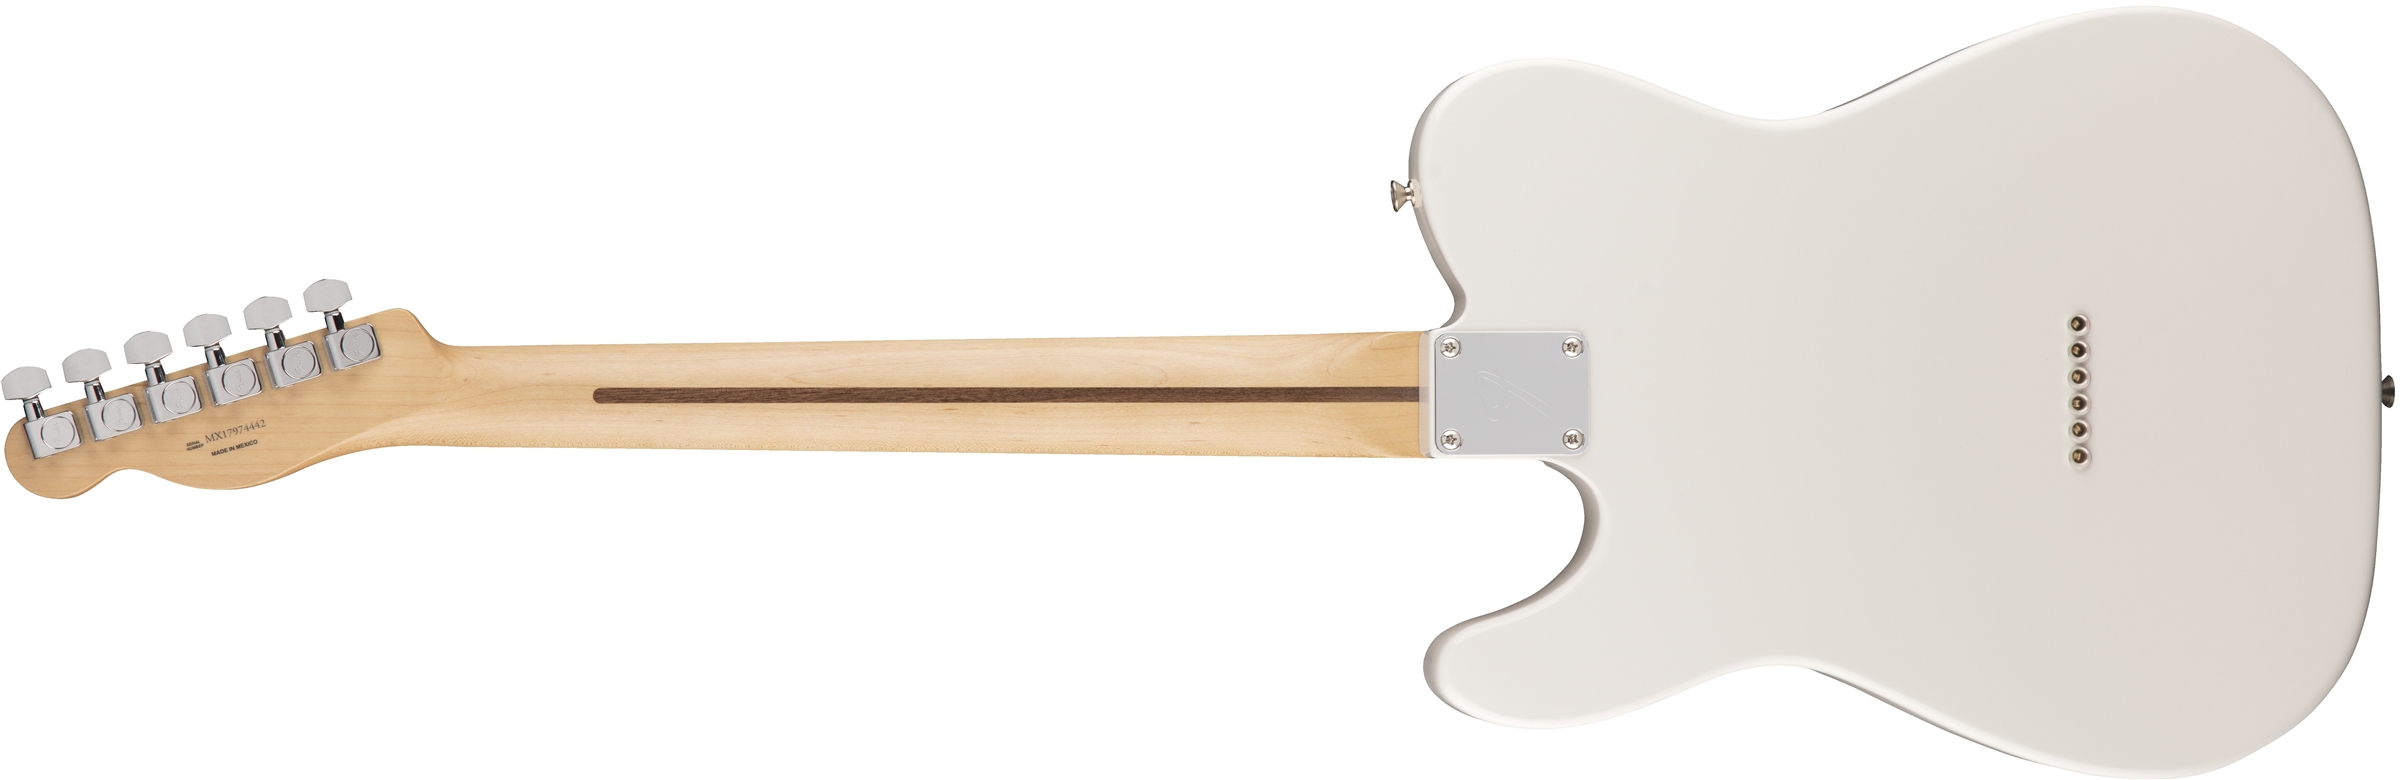 Fender Tele Player Mex Ss Pf - Polar White - Televorm elektrische gitaar - Variation 1